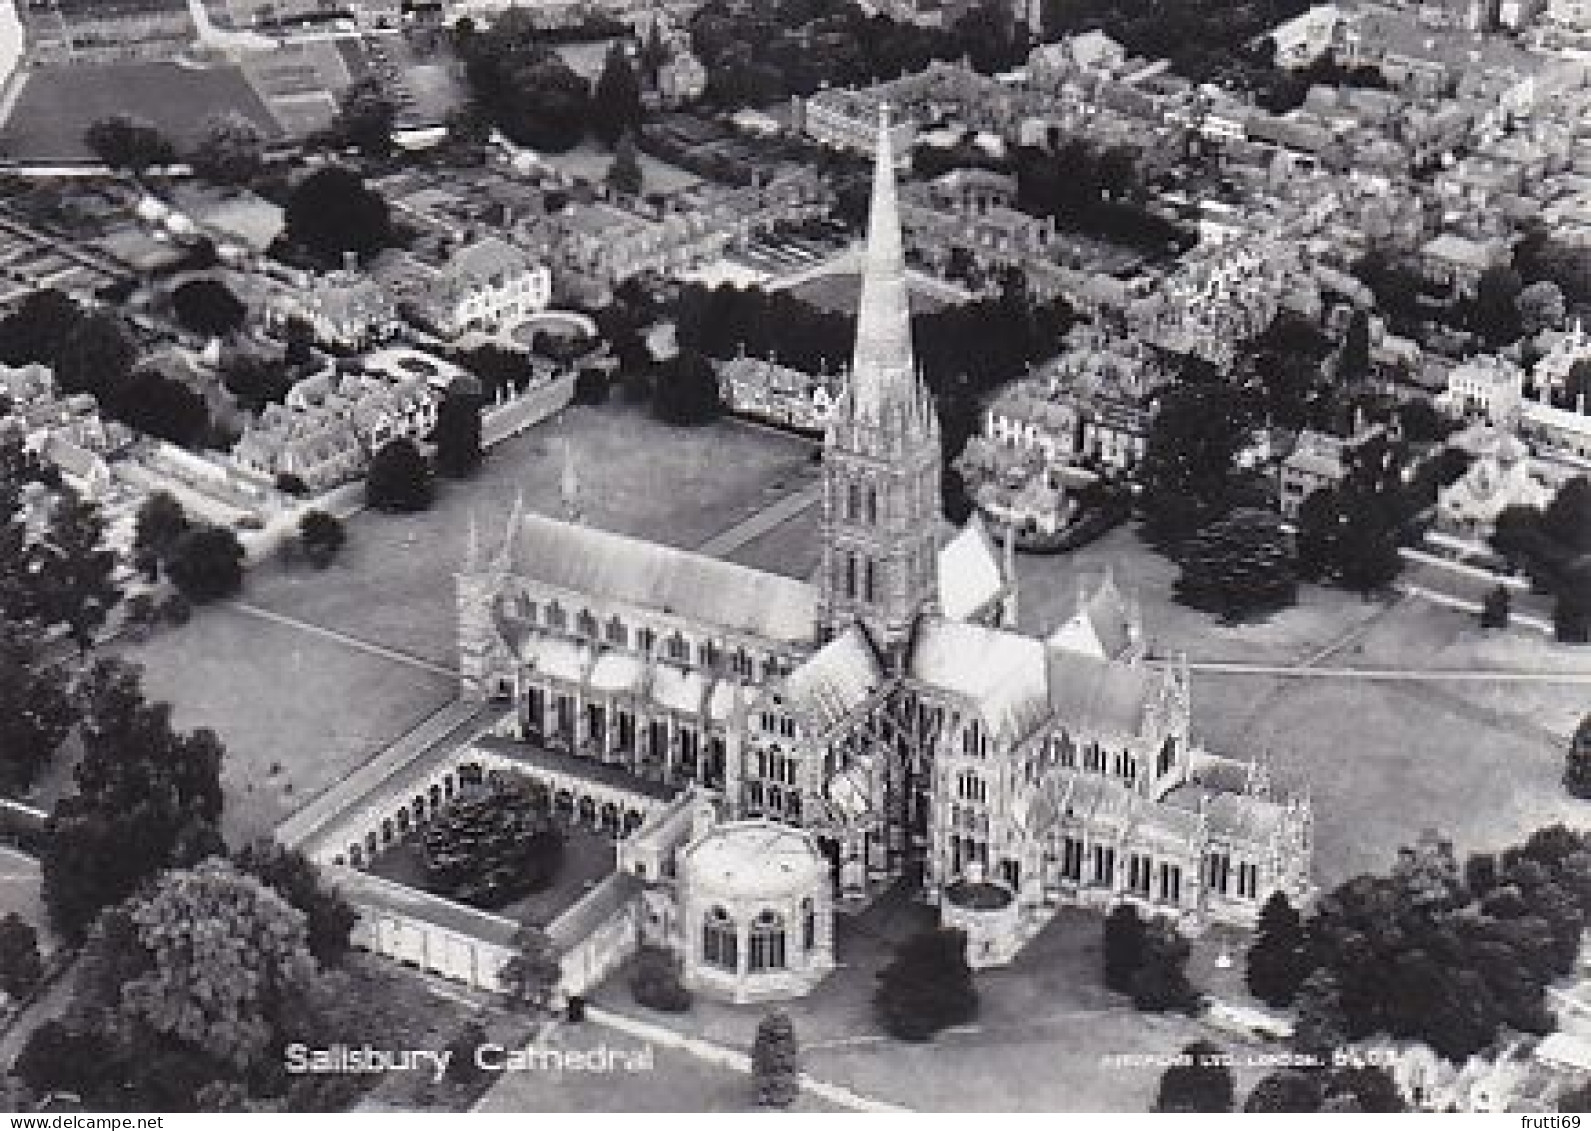 AK 185733 ENGLAND - Sailsbury Cathedral - Salisbury